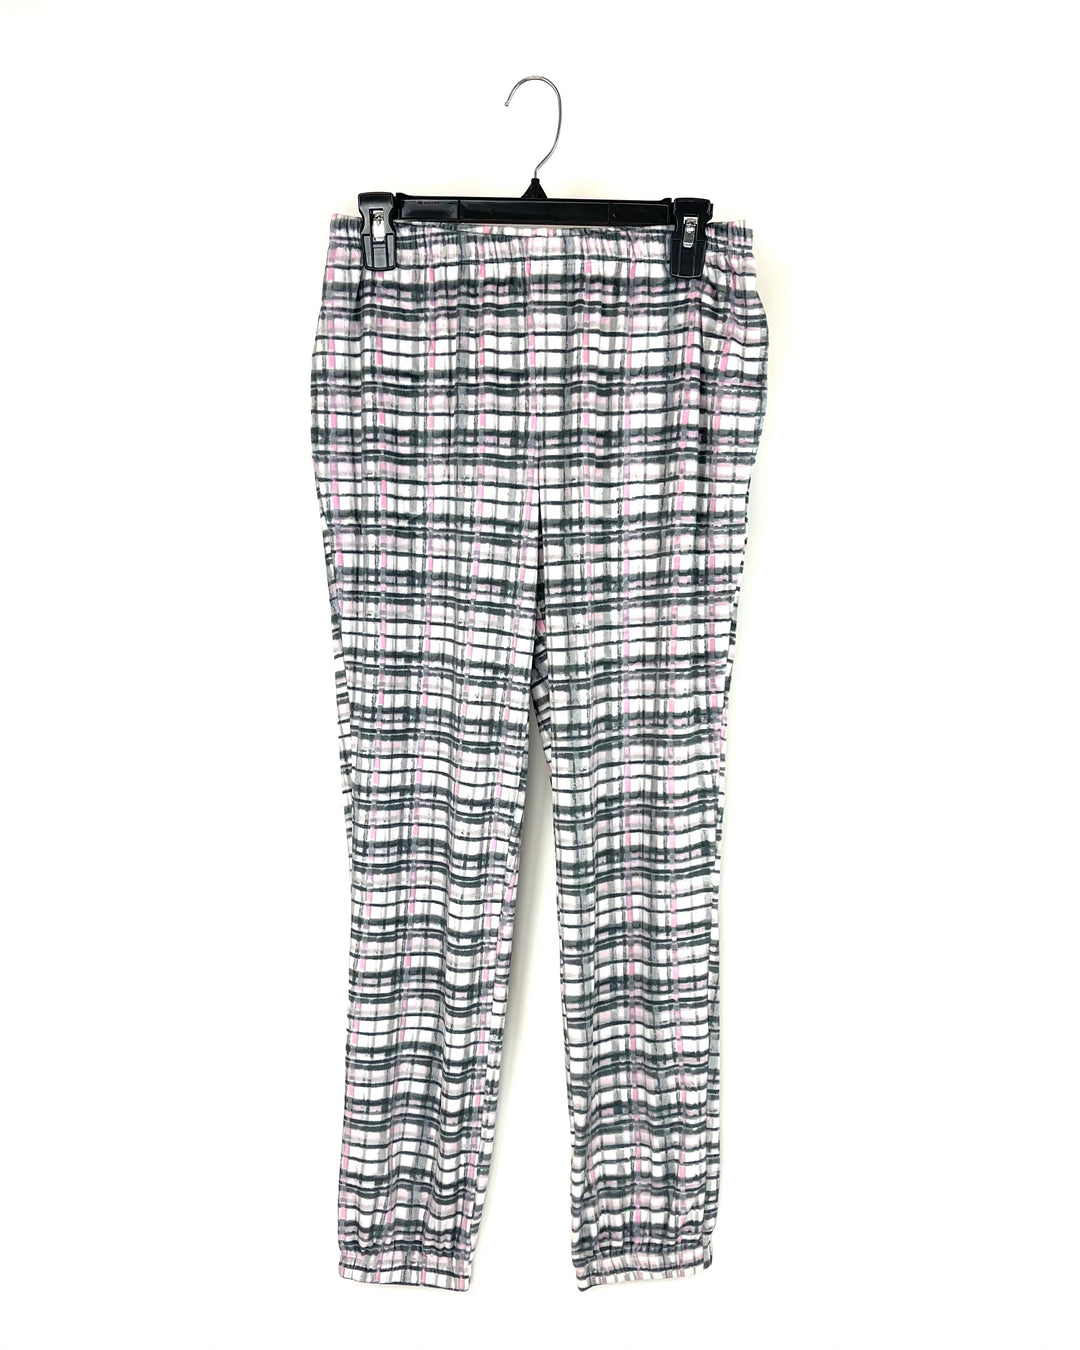 Grey and Pink Plaid Pajama Pants - Size 4/6